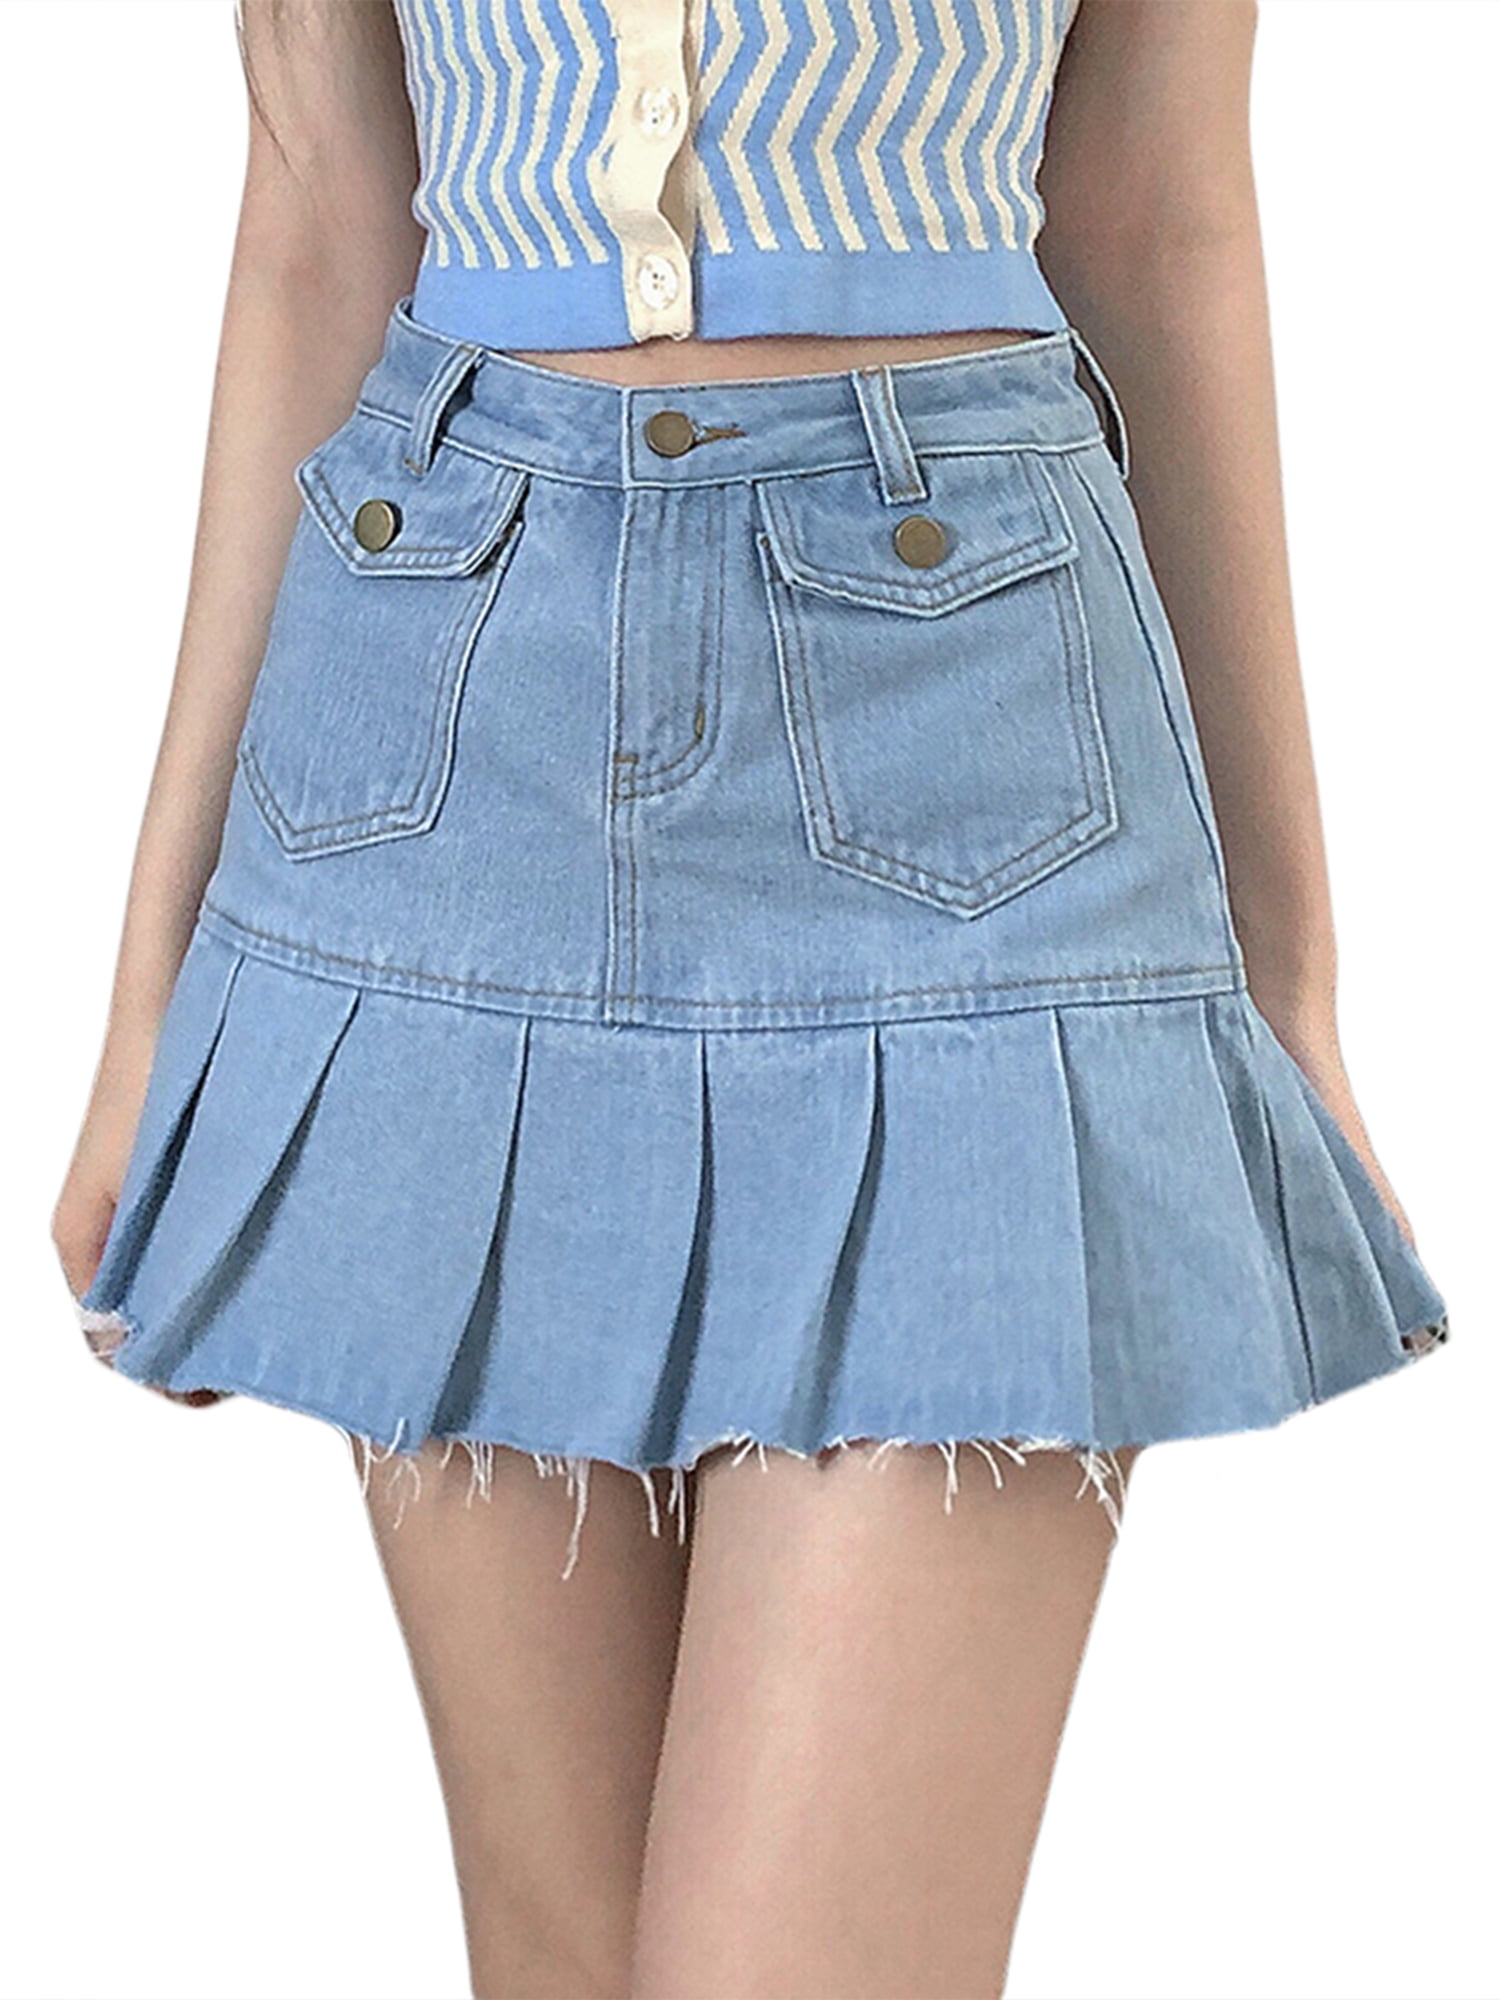 Pleated Skort Jean Shorts Skirt Preloved Vintage Retro Recycled Jean Skort Size 11 12